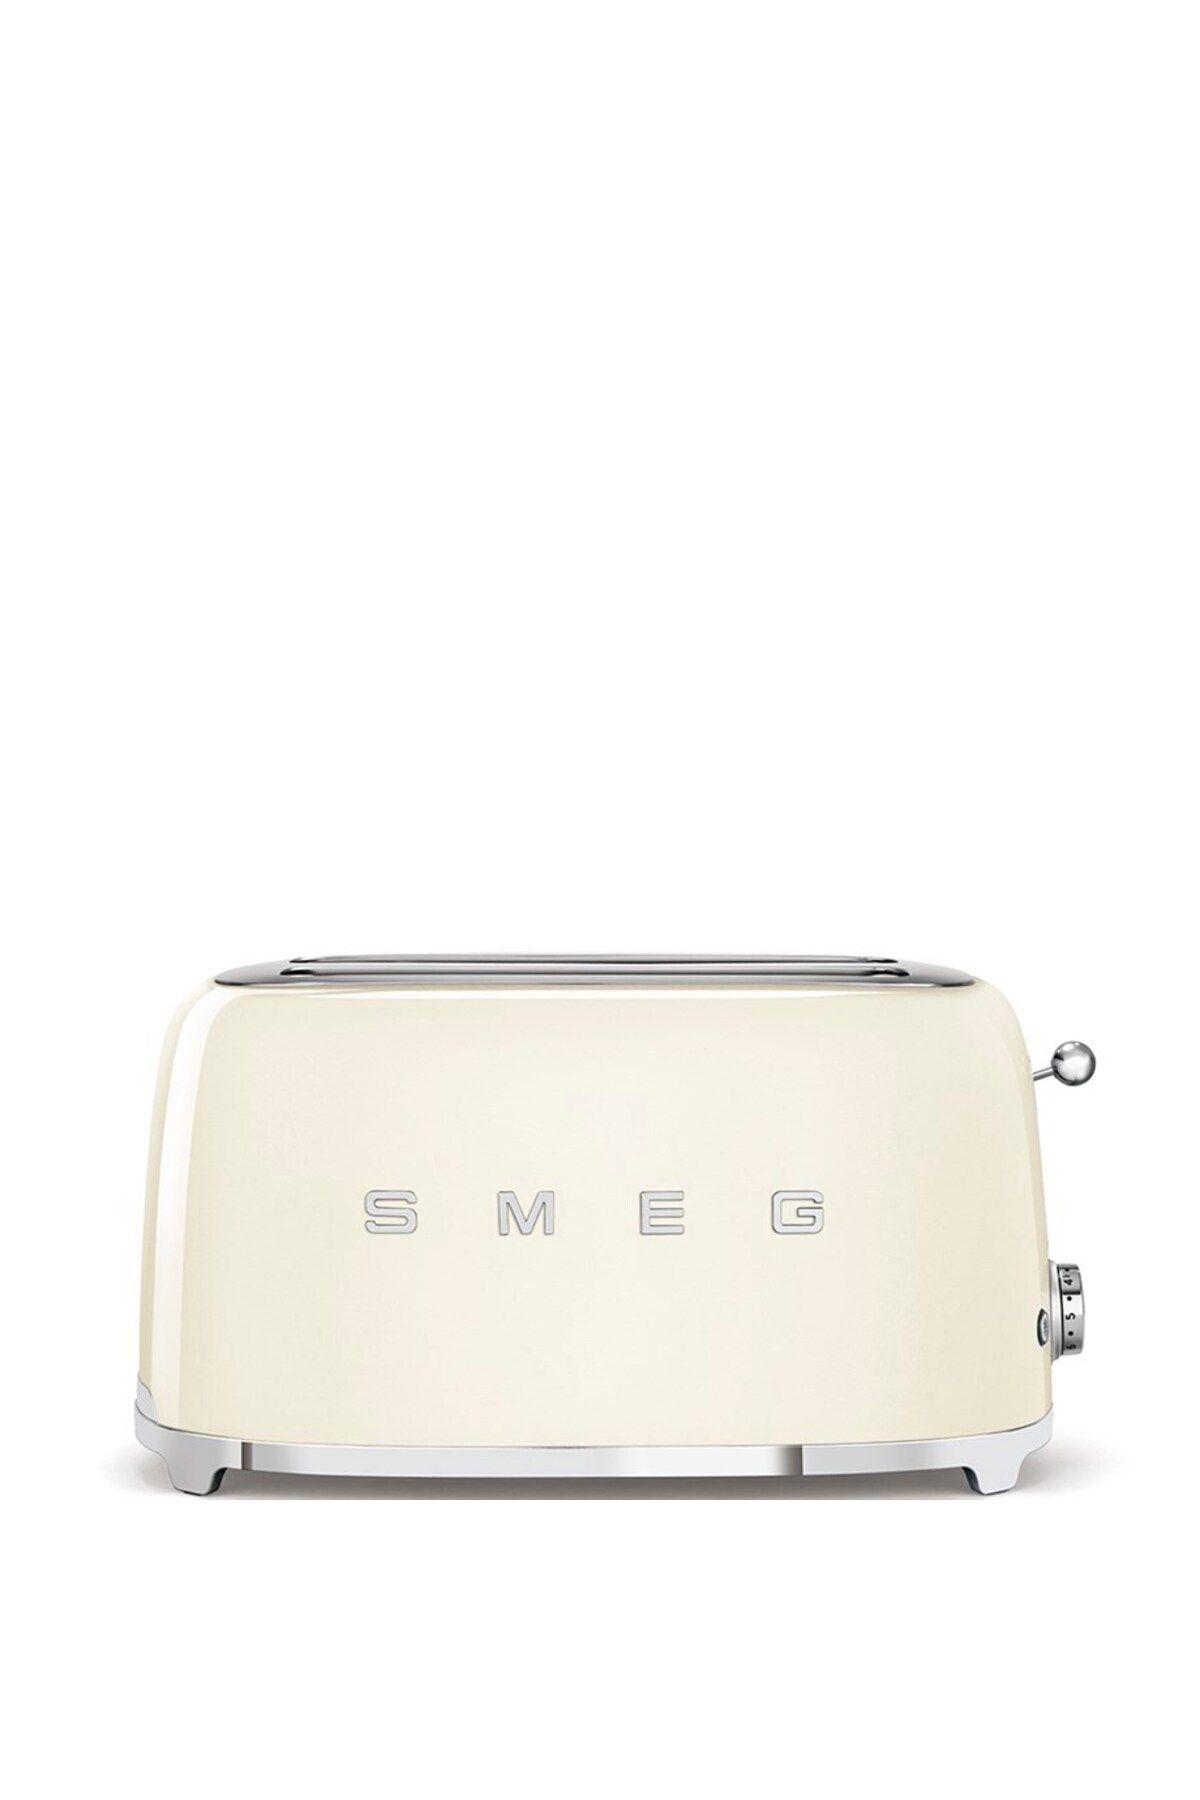 Smeg Krem Ekmek Kızartma Makinesi 2x4